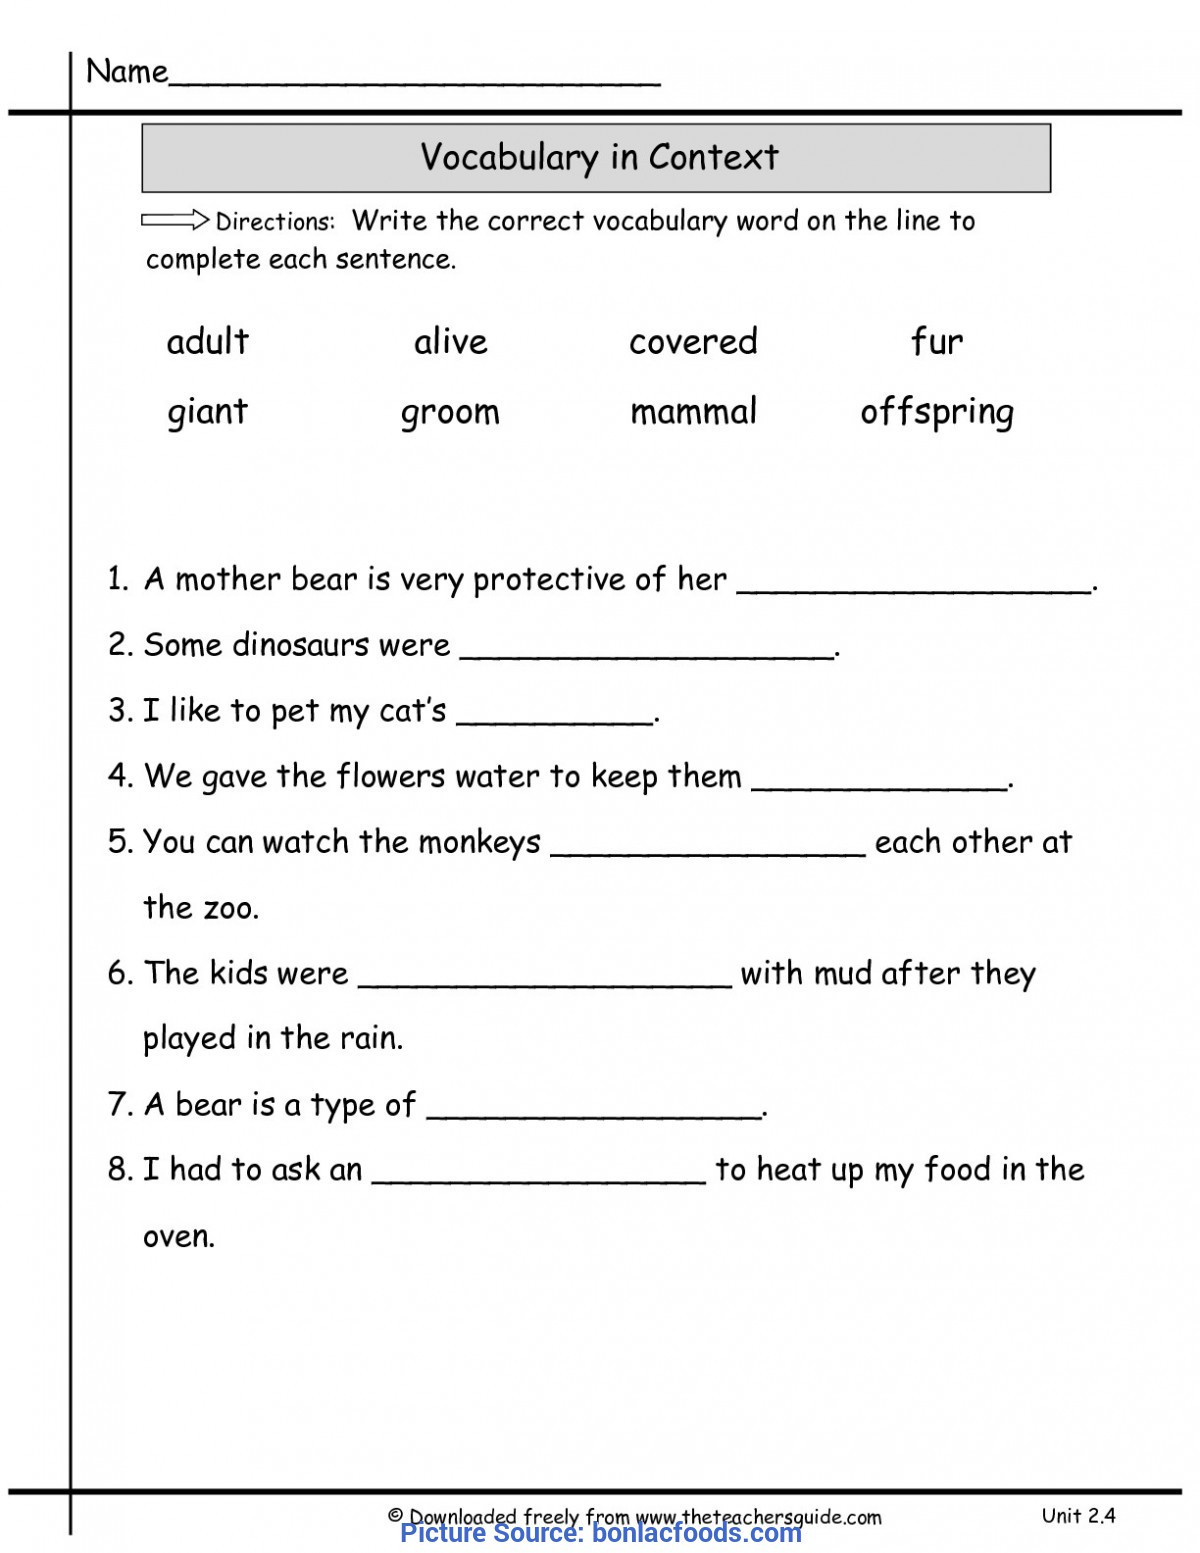 Second Grade social Studies Worksheet Valuable social Stu S Lessons for 2nd Grade Worksheets All